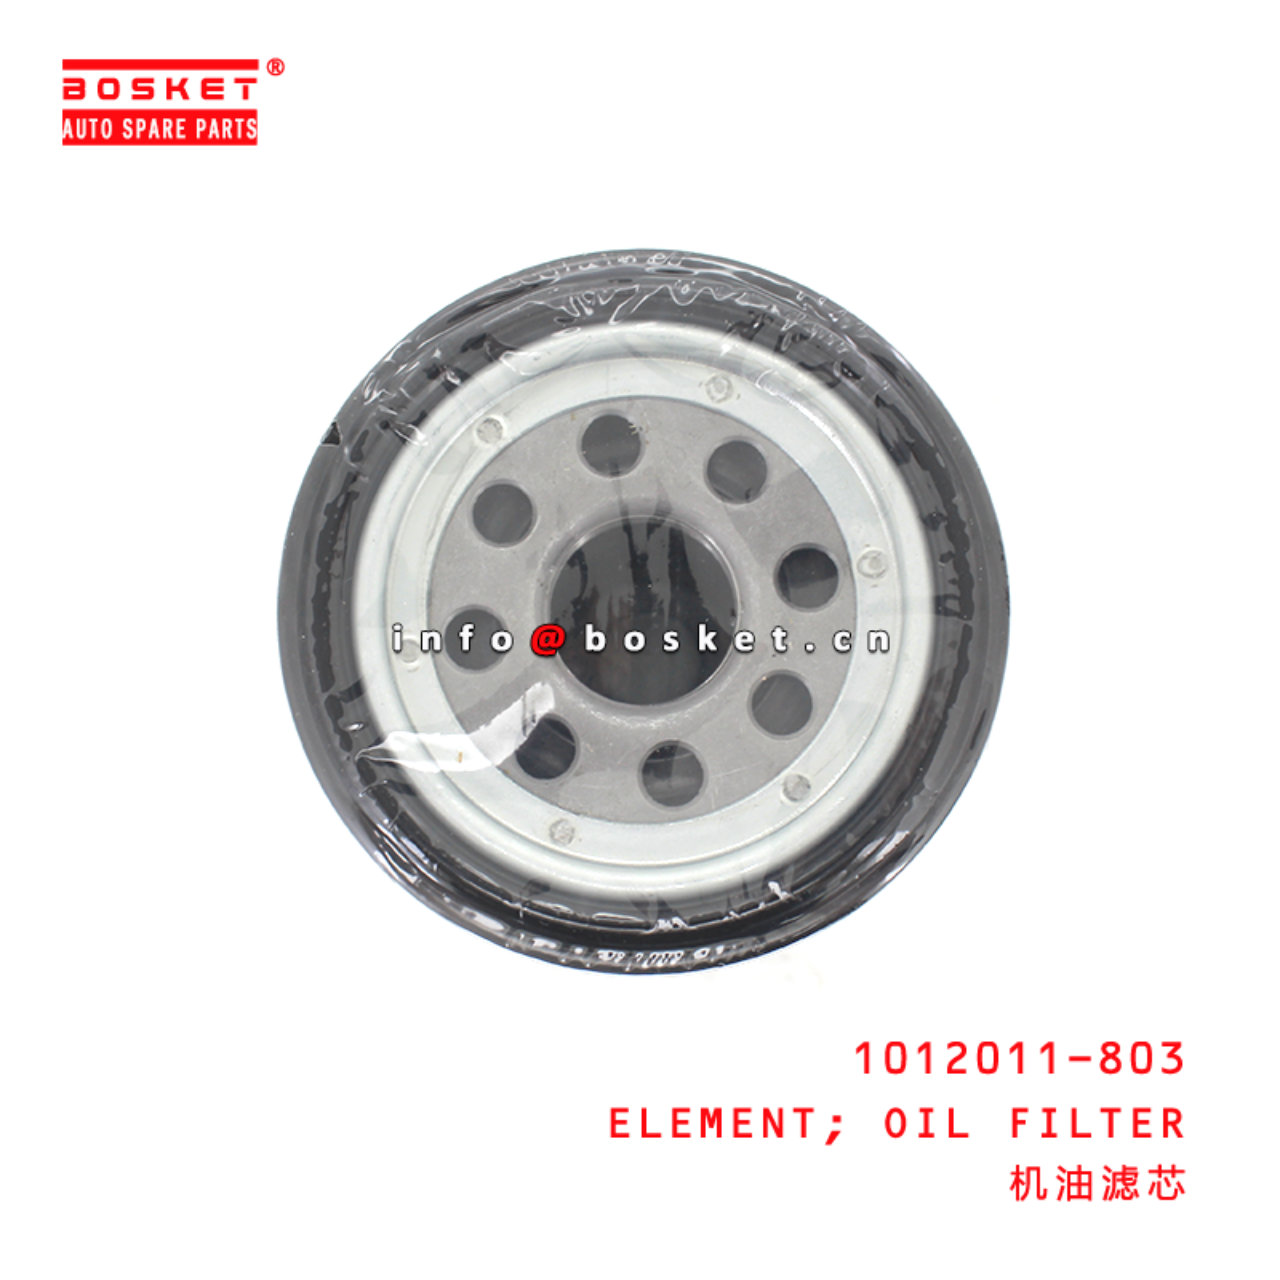 1012011-803 Oil Filter Element suitable for ISUZU NKR77 P600 1012011-803